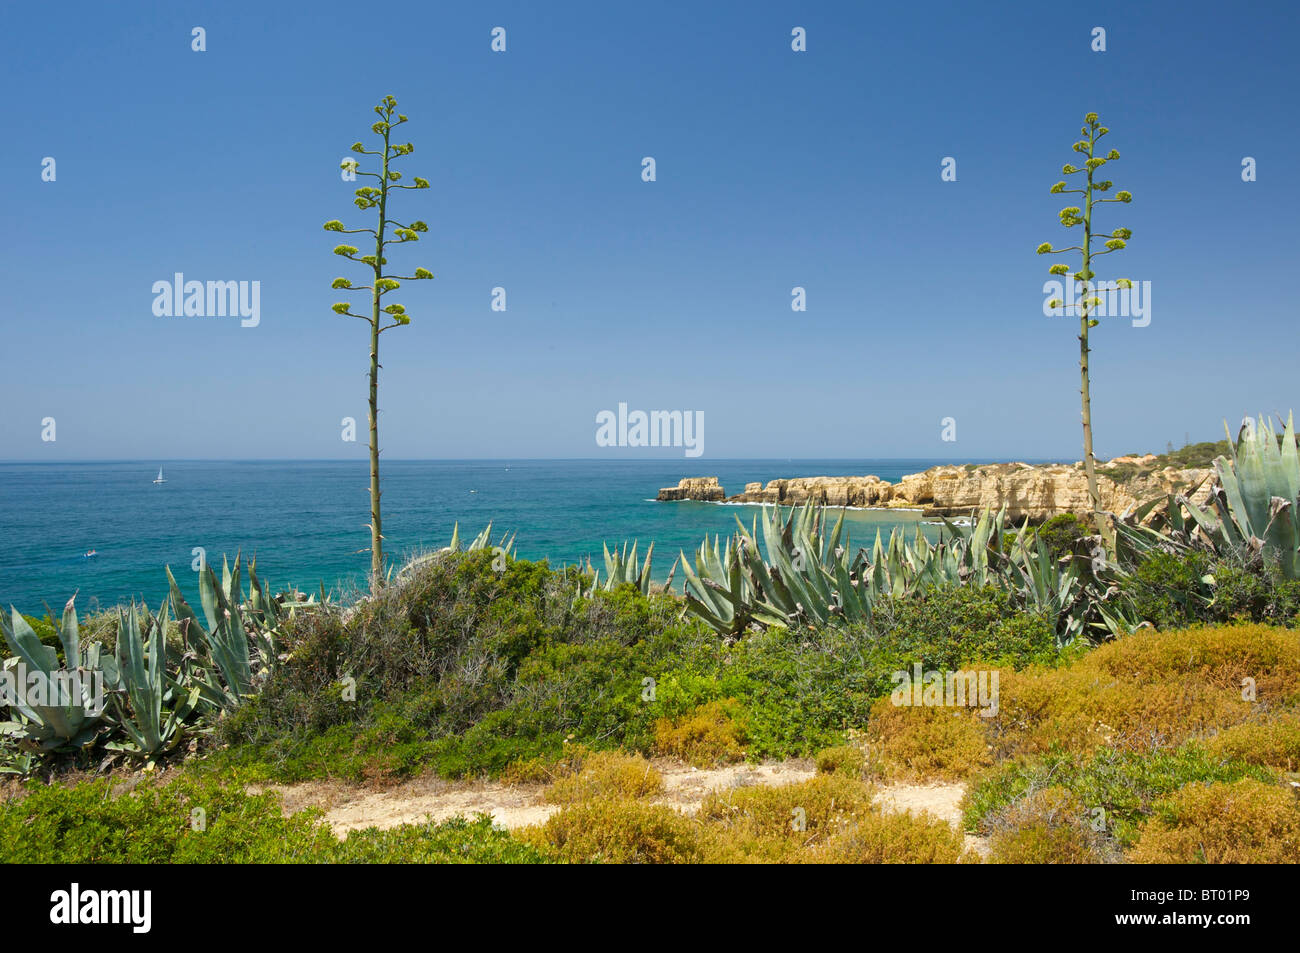 Praia da Coelha, Algarve, Portugal Banque D'Images